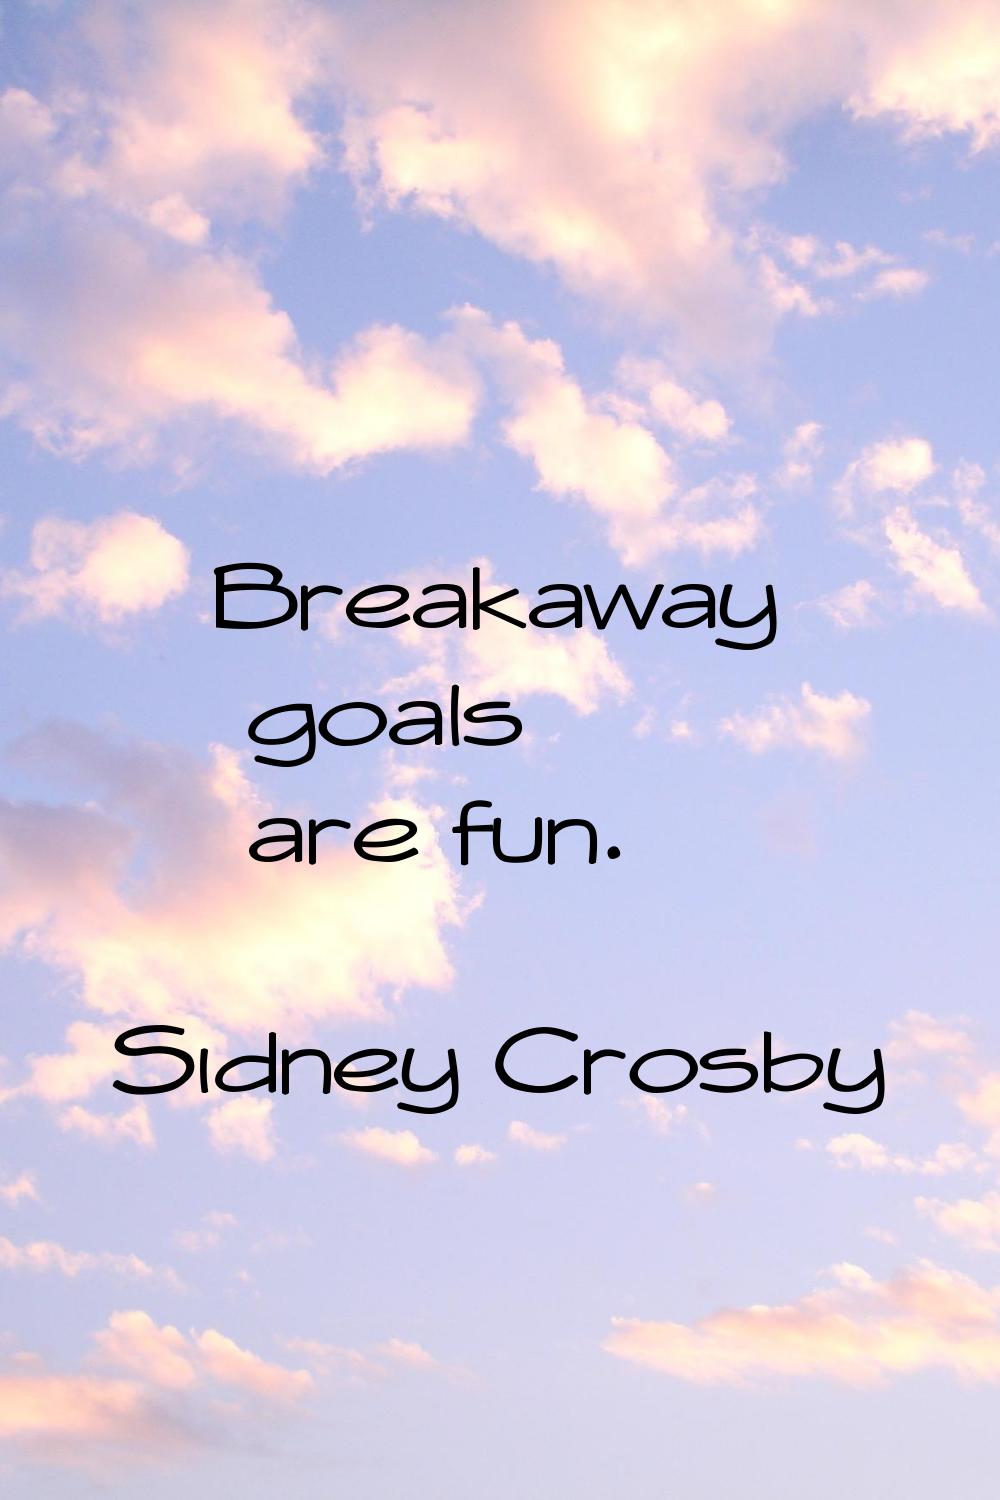 Breakaway goals are fun.